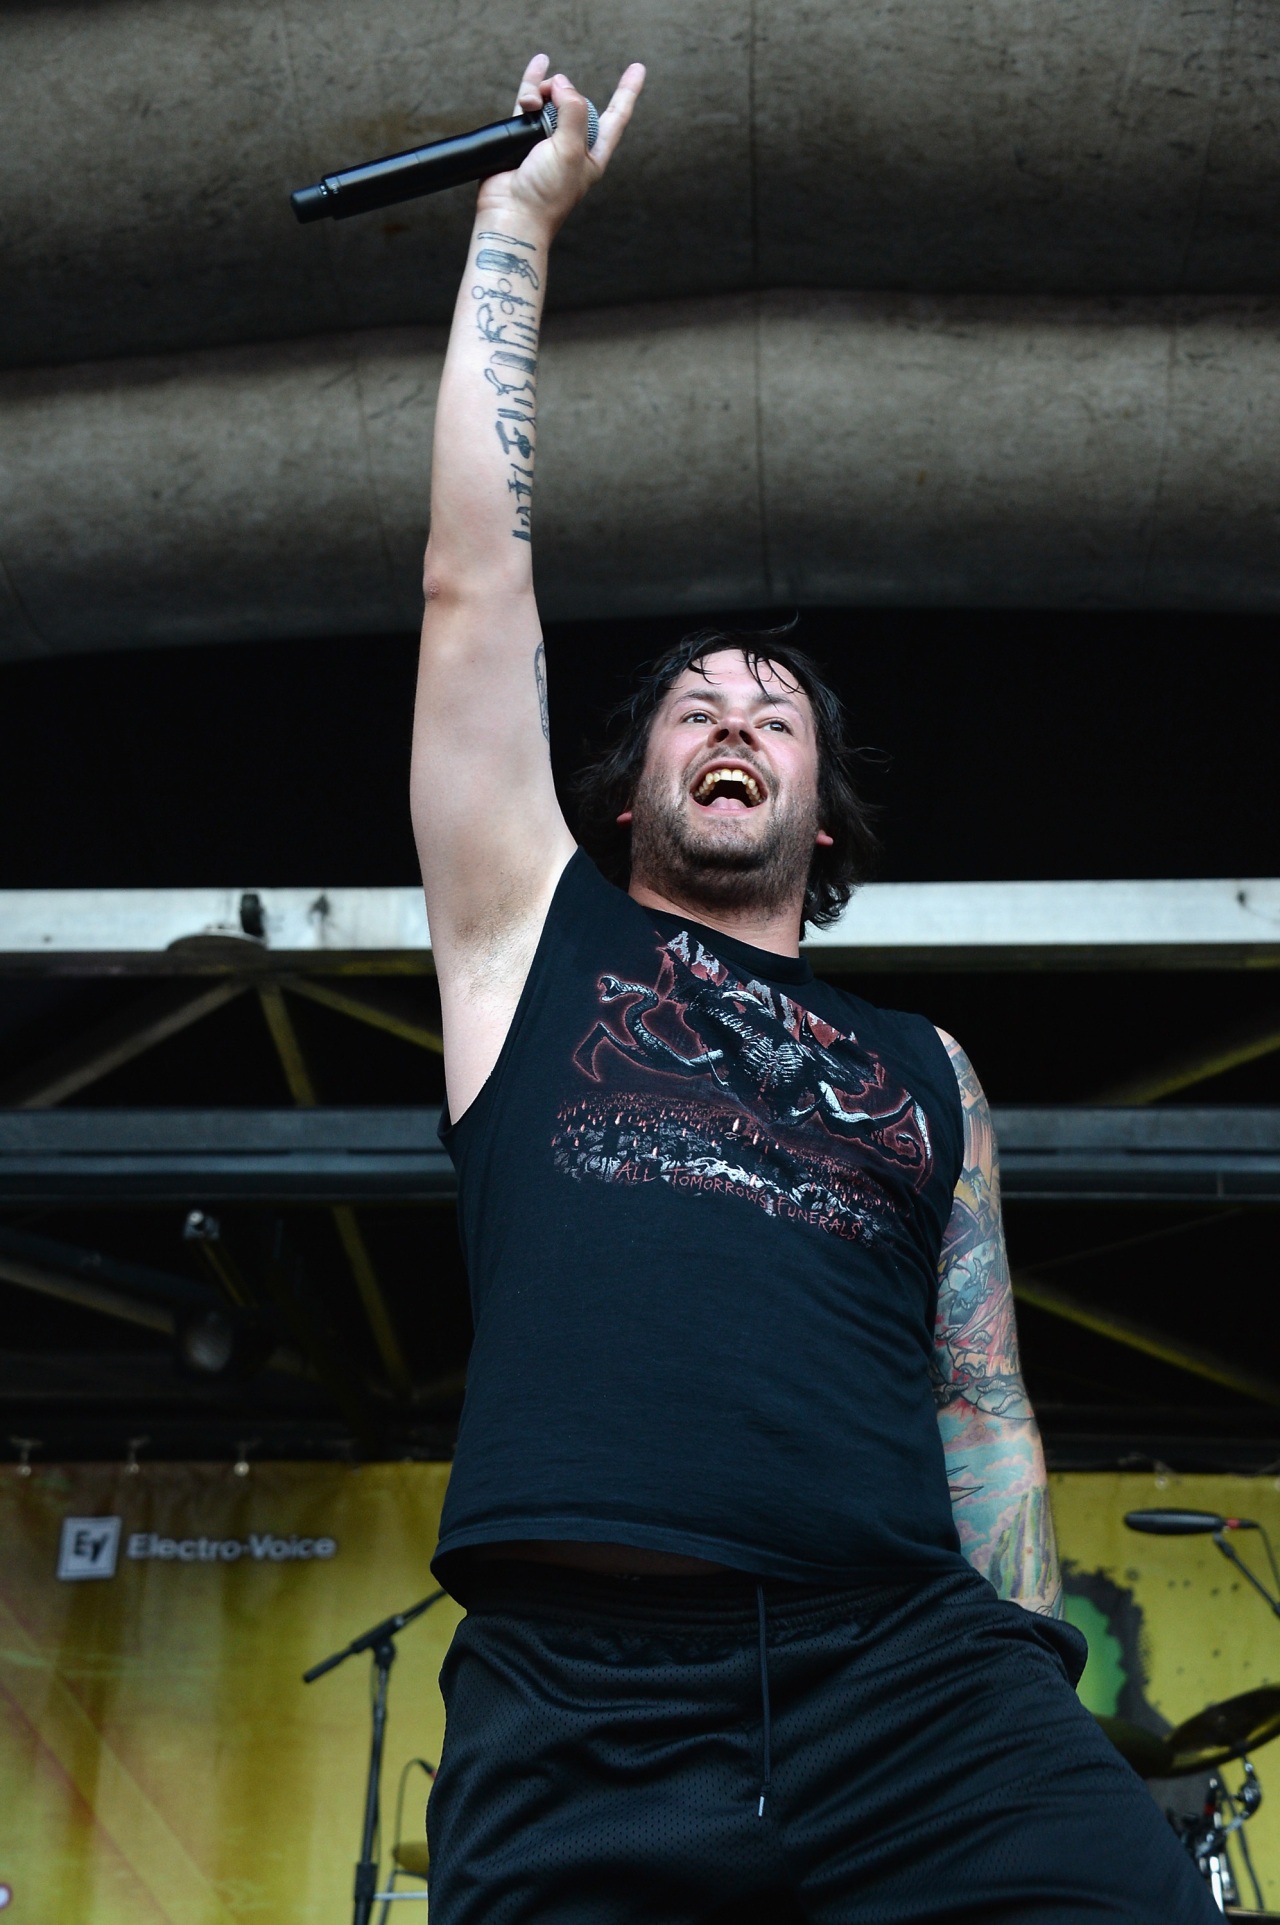 Michigan-based metal vocalist passes away